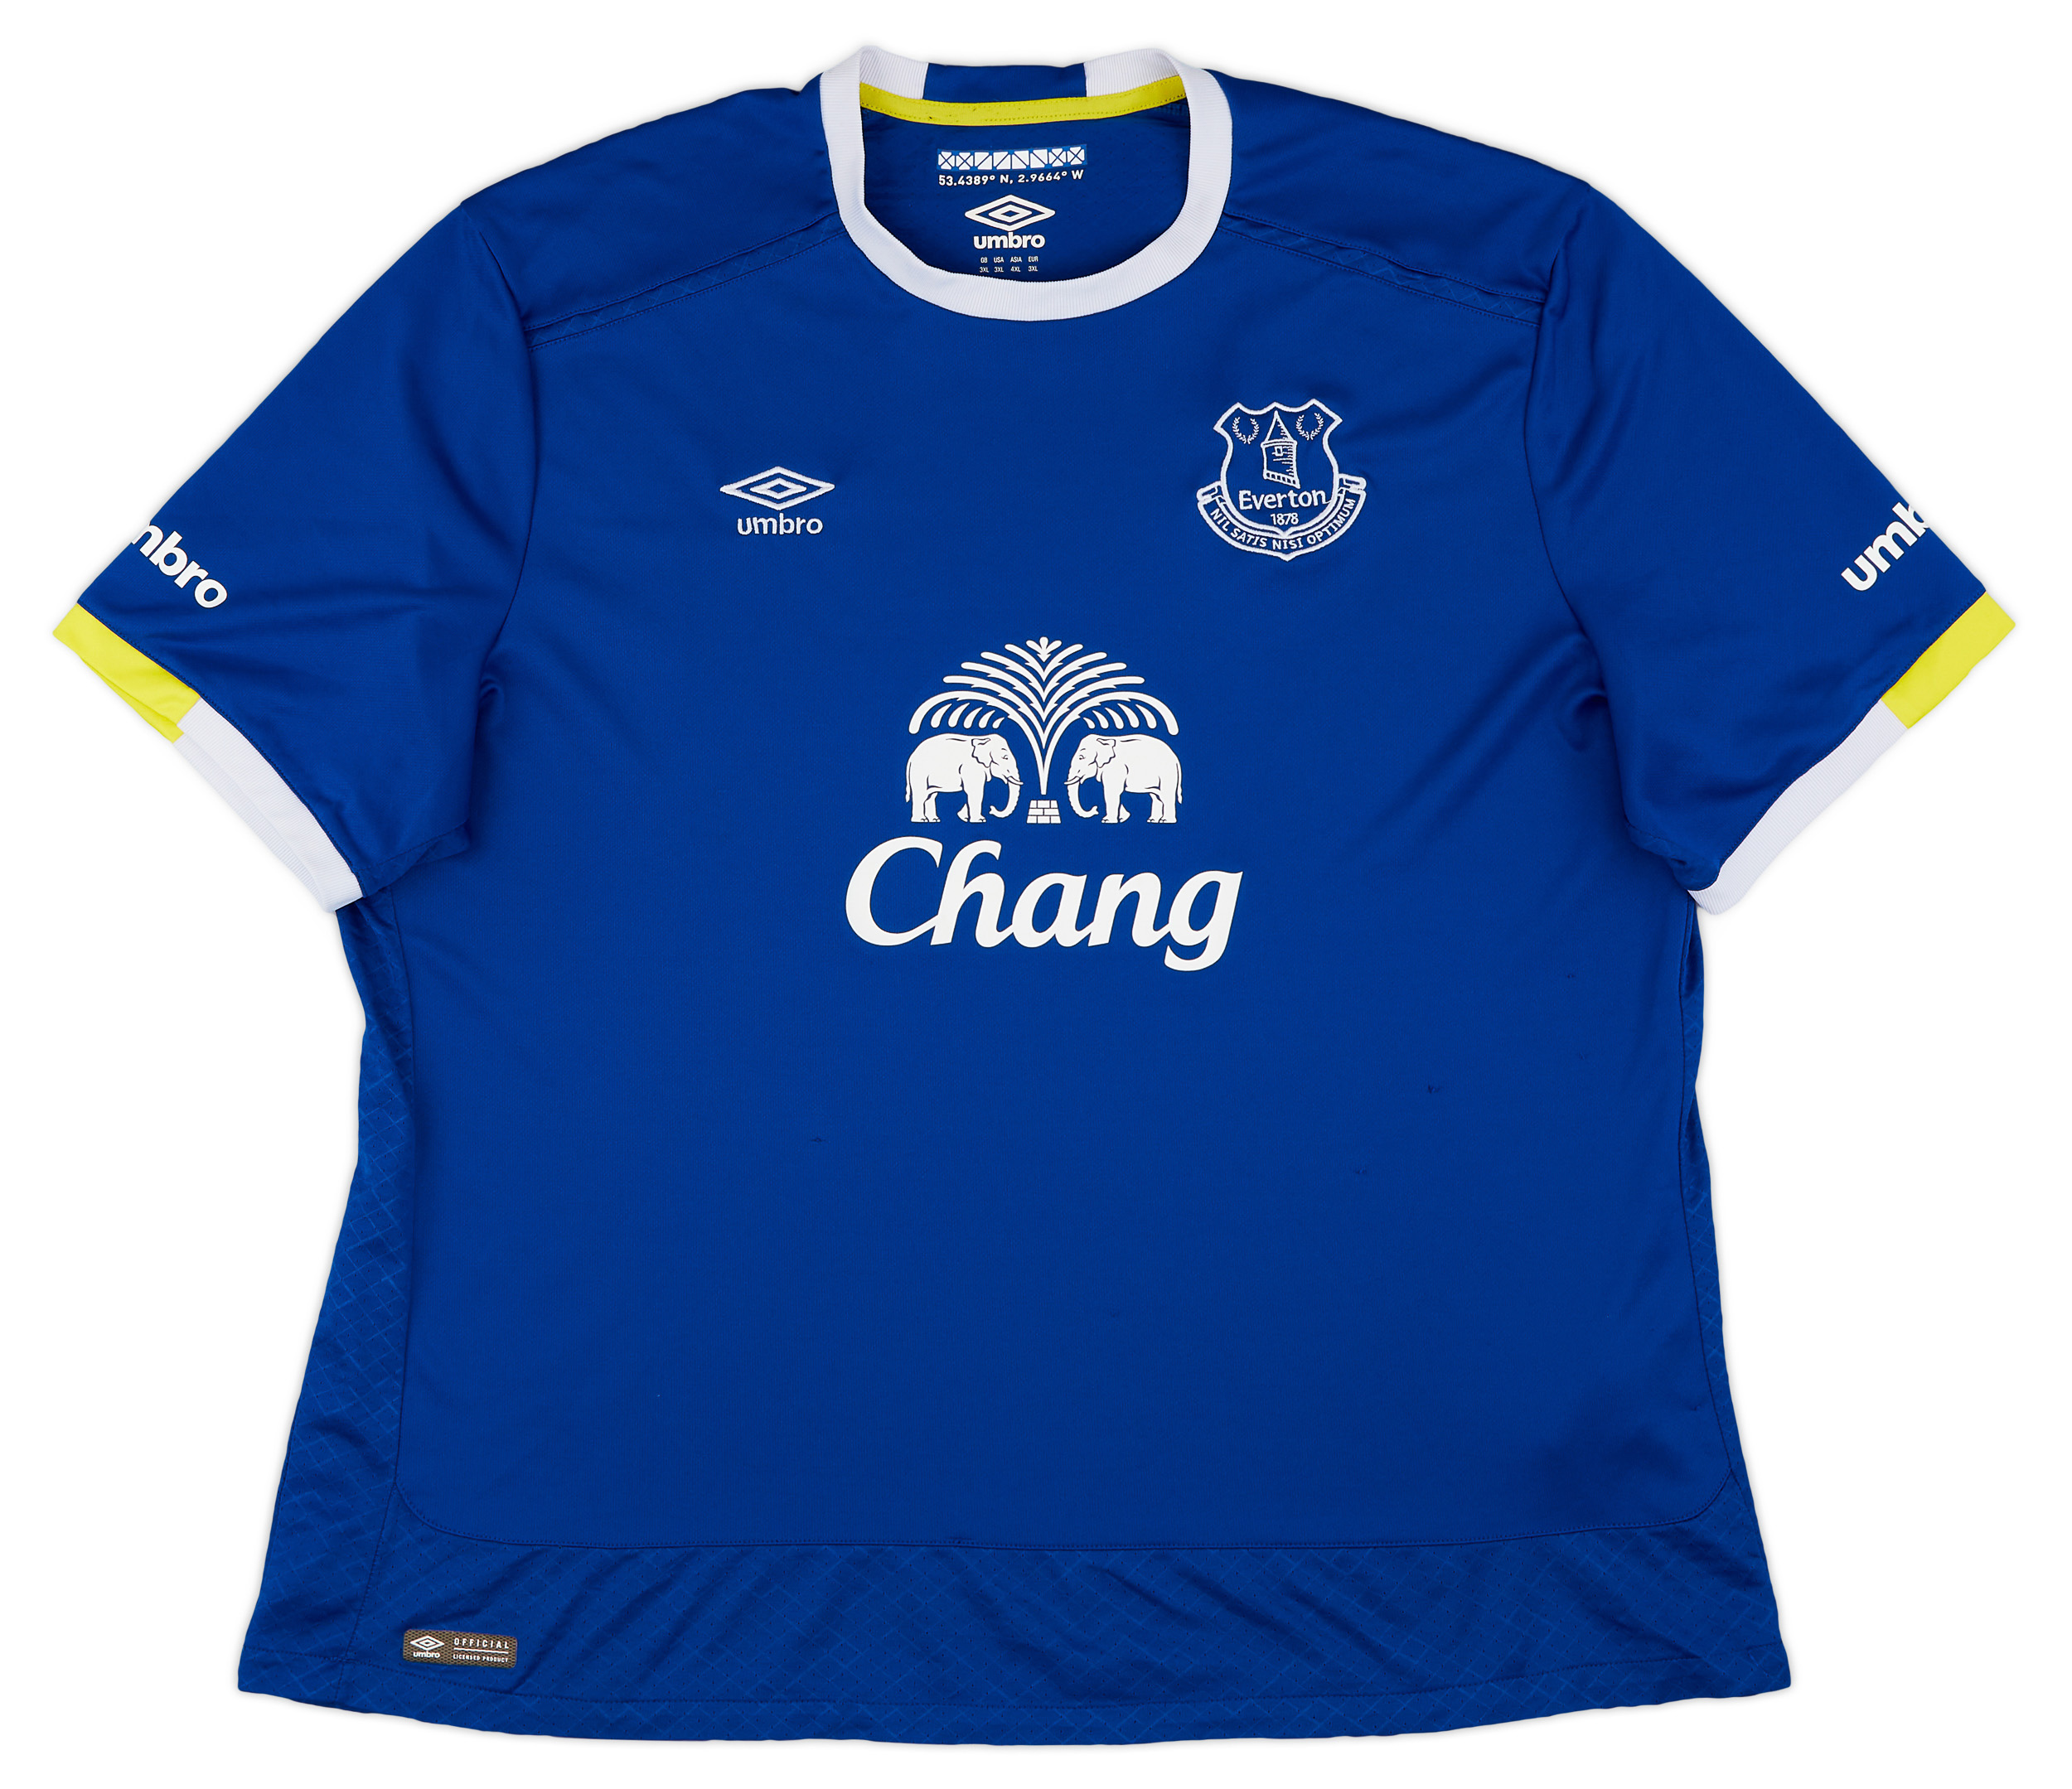 2016-17 Everton Home Shirt - Excellent 9/10 - ()